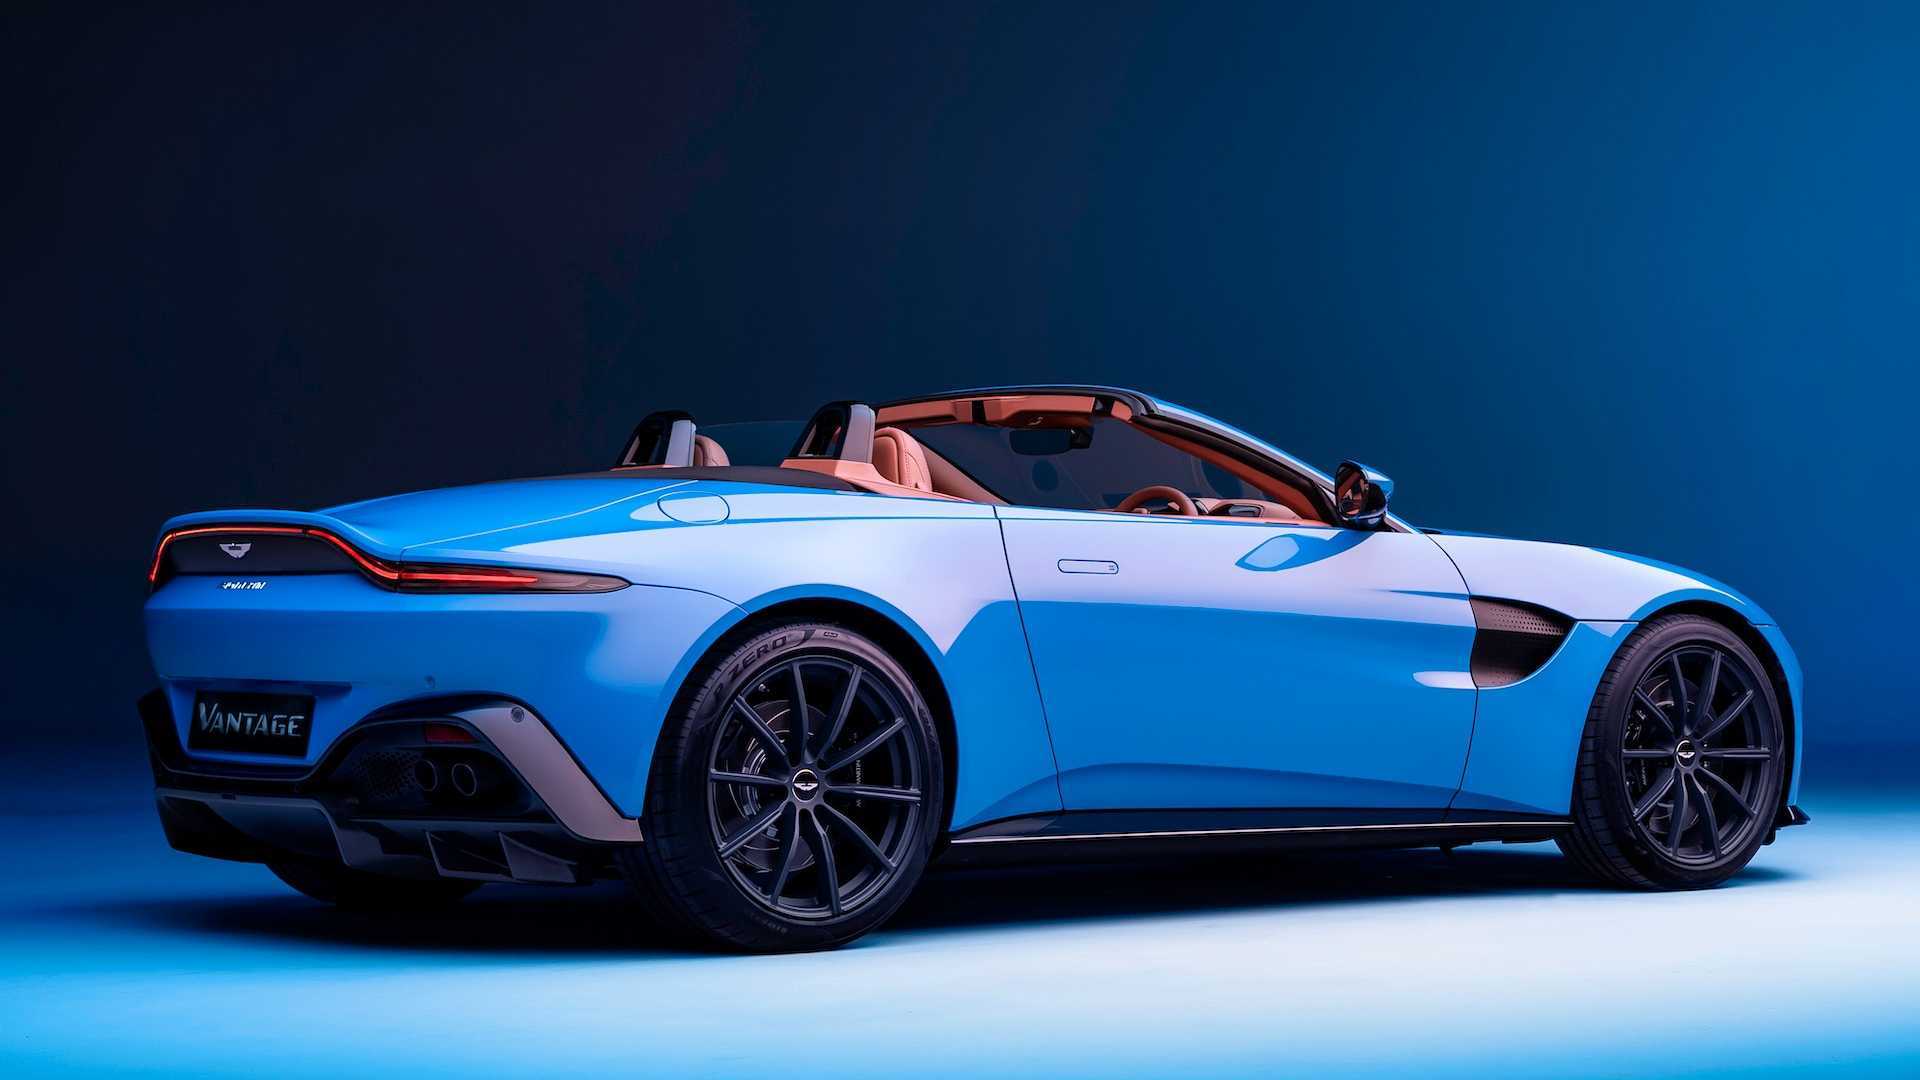 2021 Aston Martin Vantage Roadster Has World's Fastest Convertible Roof